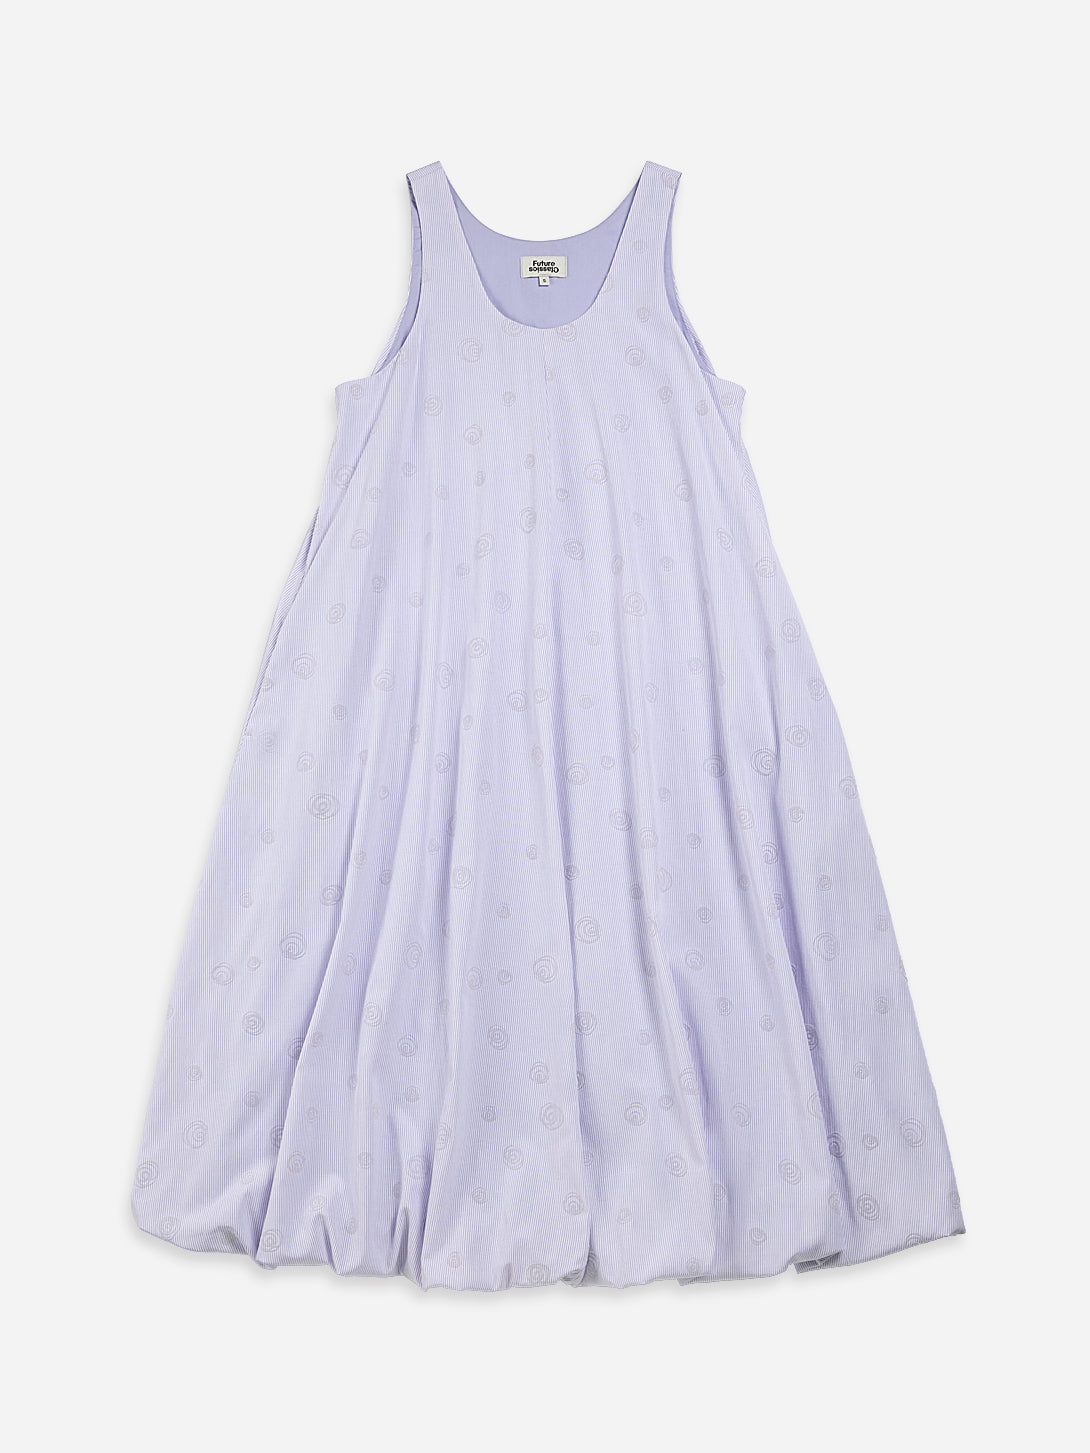 Pastel Lilac Stripe Flocking Bubbles Balloon Dress Womens Future Classics Summer Long Dress